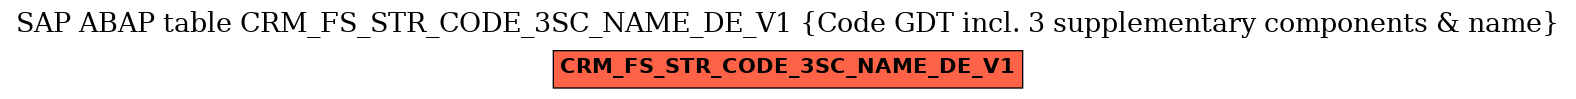 E-R Diagram for table CRM_FS_STR_CODE_3SC_NAME_DE_V1 (Code GDT incl. 3 supplementary components & name)